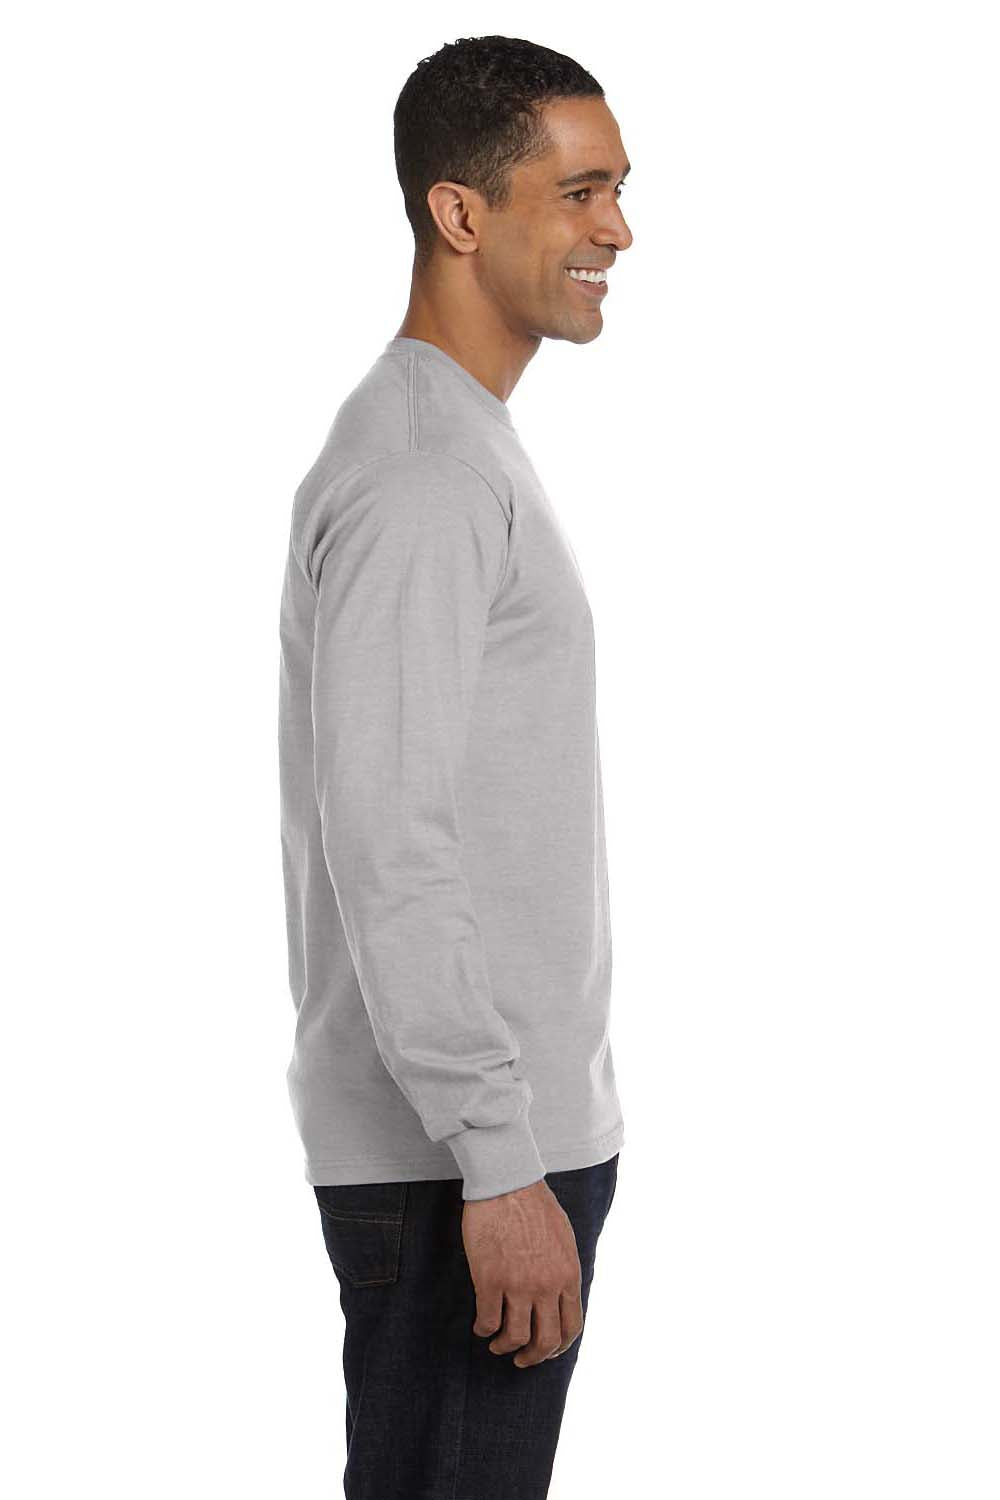 Hanes 5286 Mens ComfortSoft Long Sleeve Crewneck T-Shirt Light Steel Grey Side